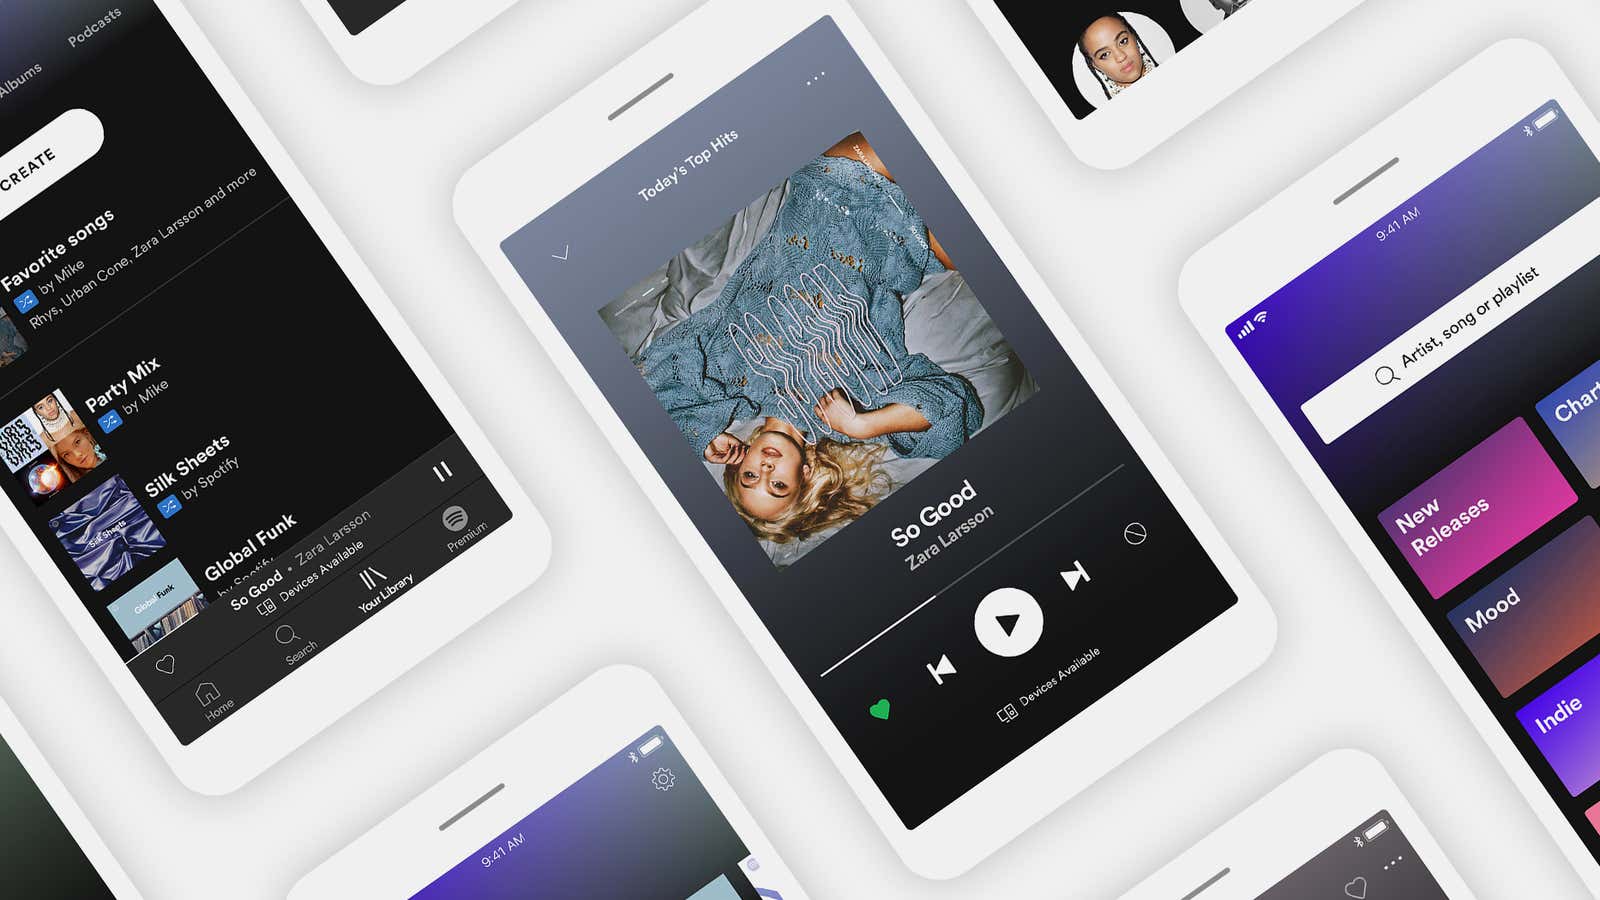 Spotify’s new free app.